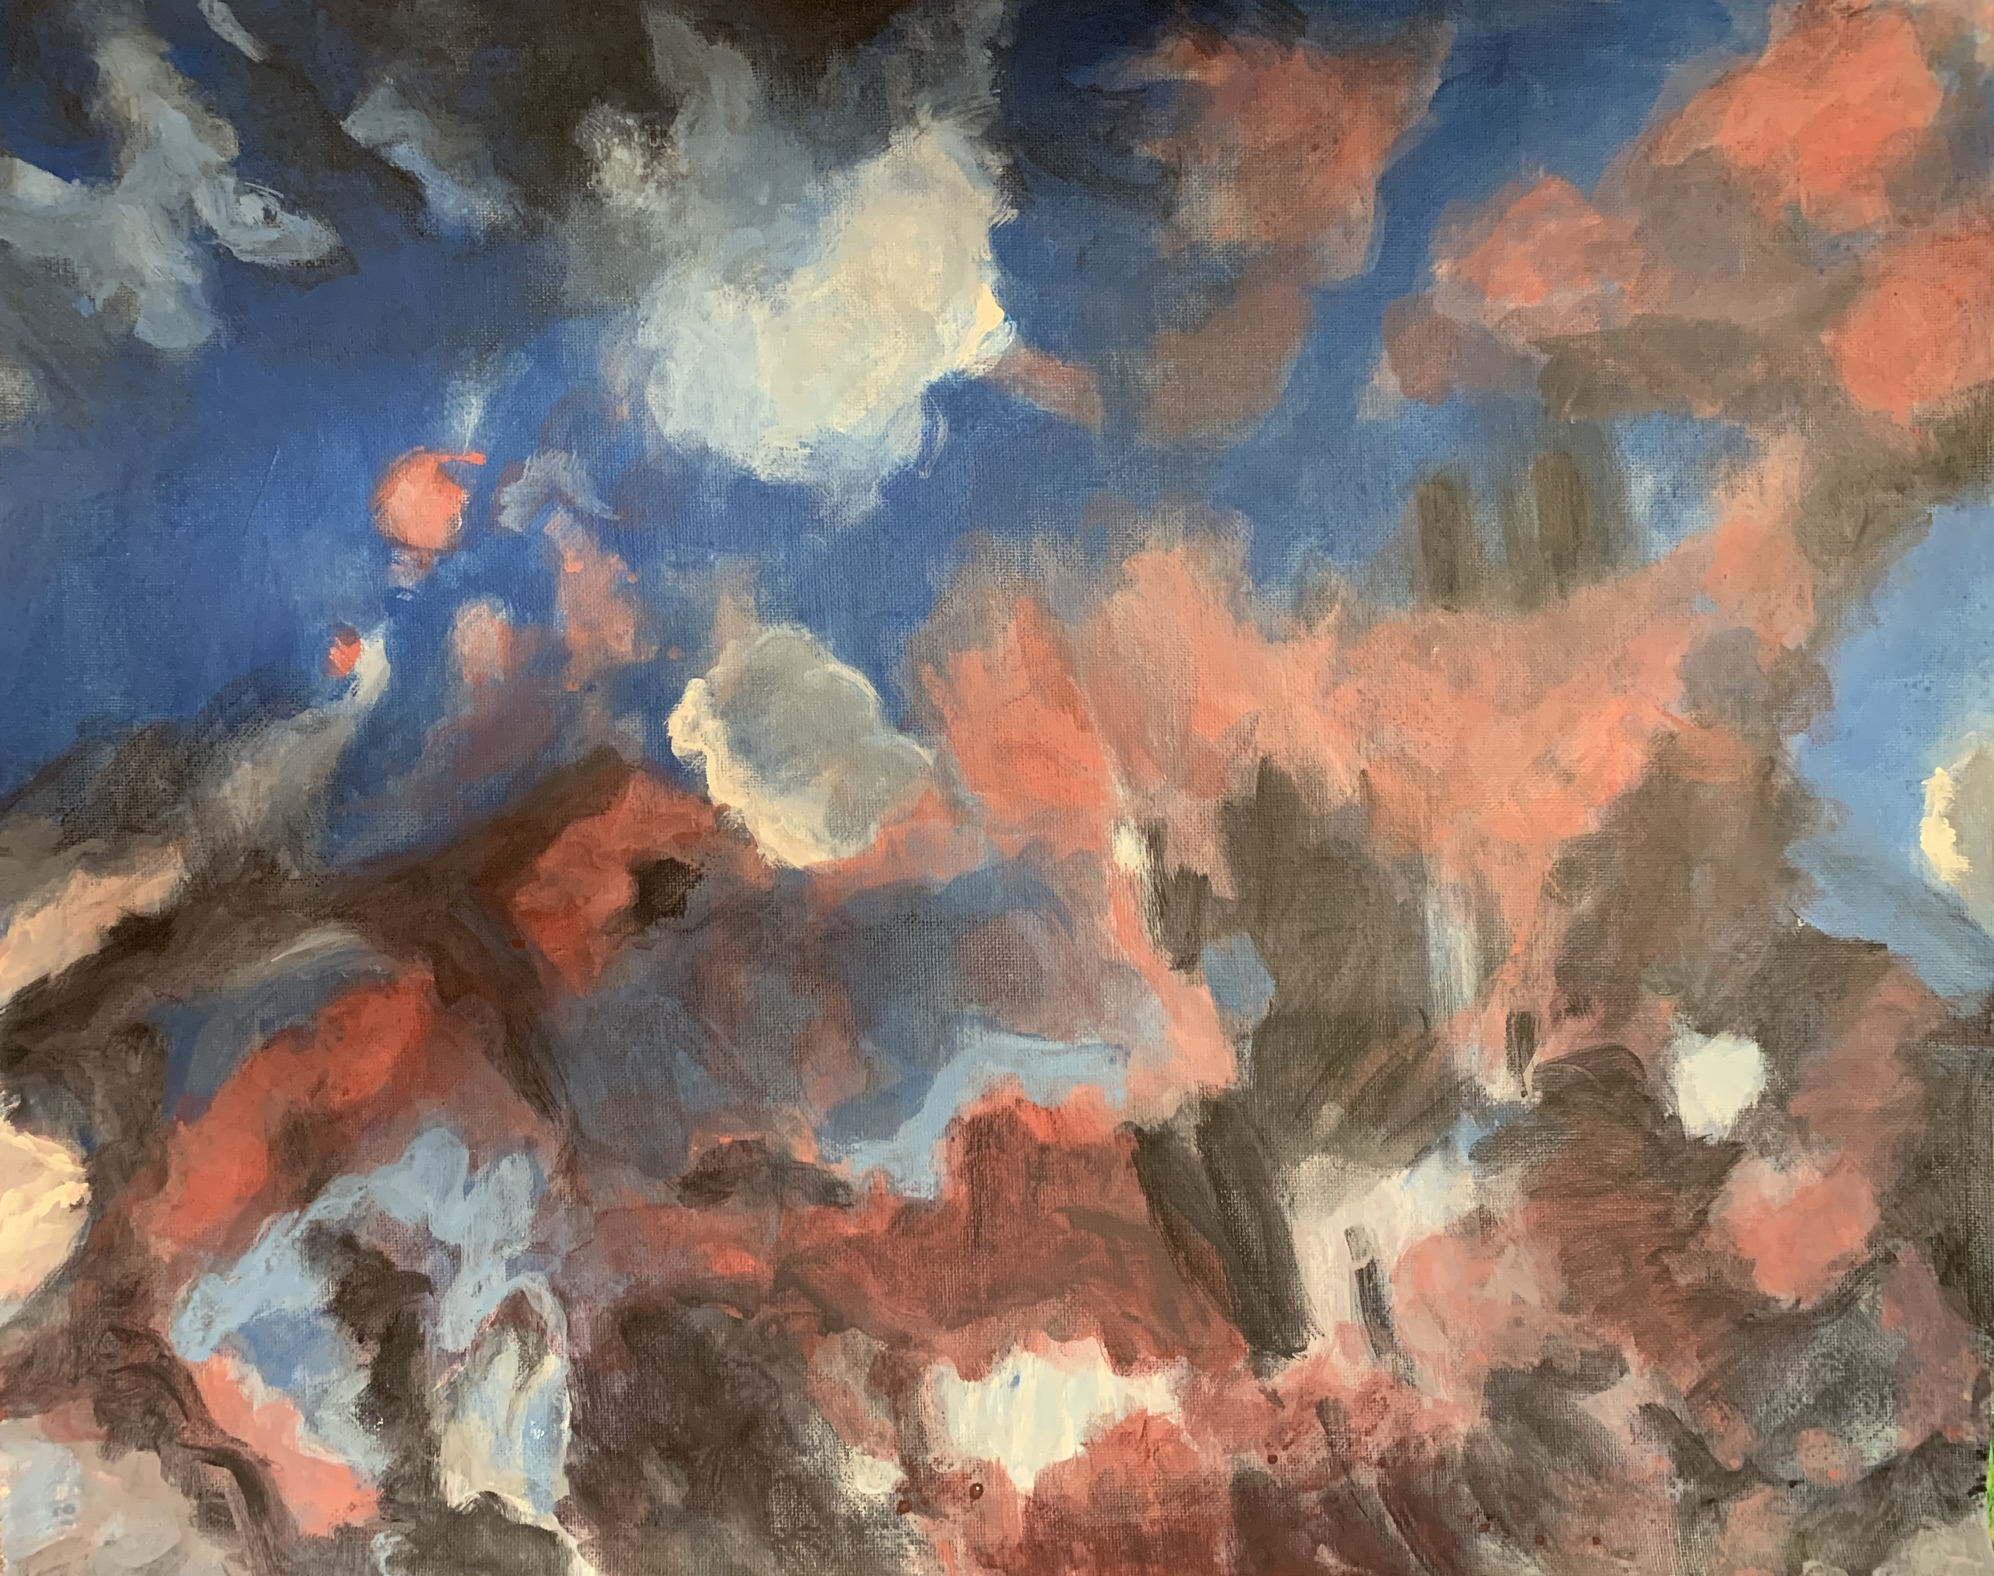 “Cloud gazing” , 16” x 20” acrylic on canvas